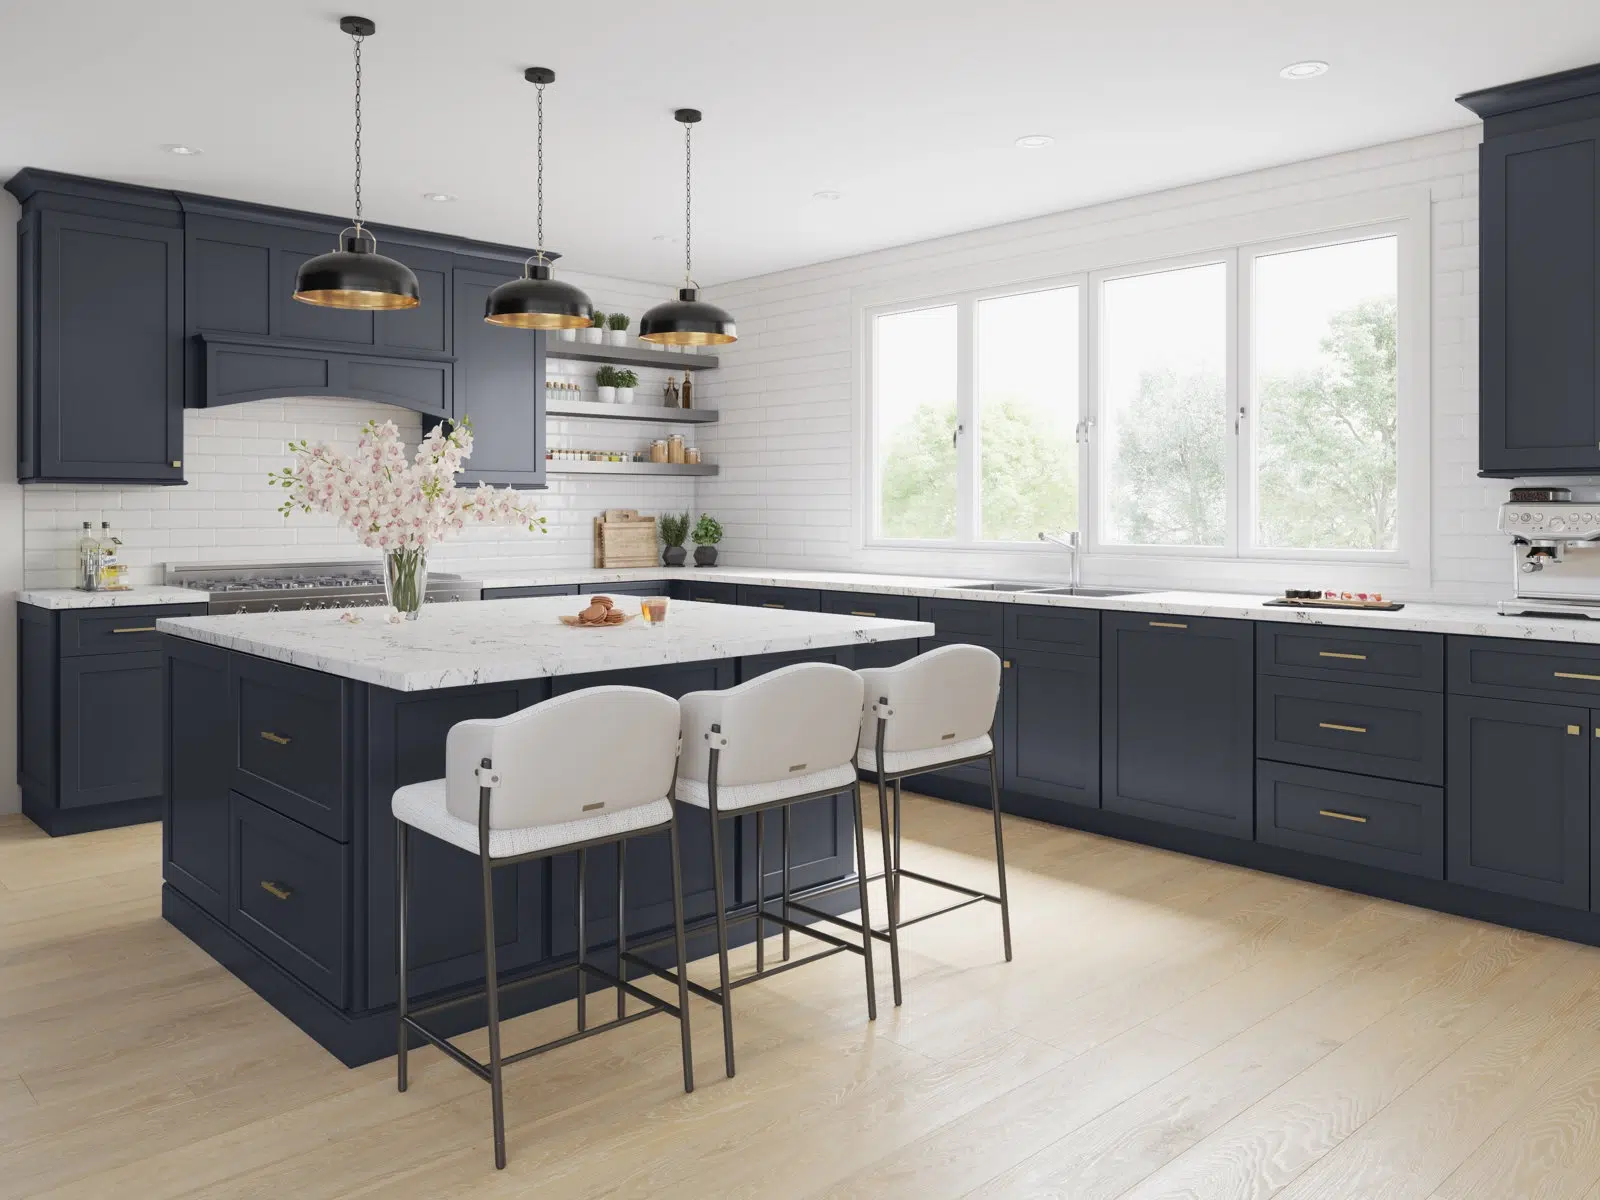 Fabuwood Navy Blue kitchen design with Galaxy Indigo Cabinets